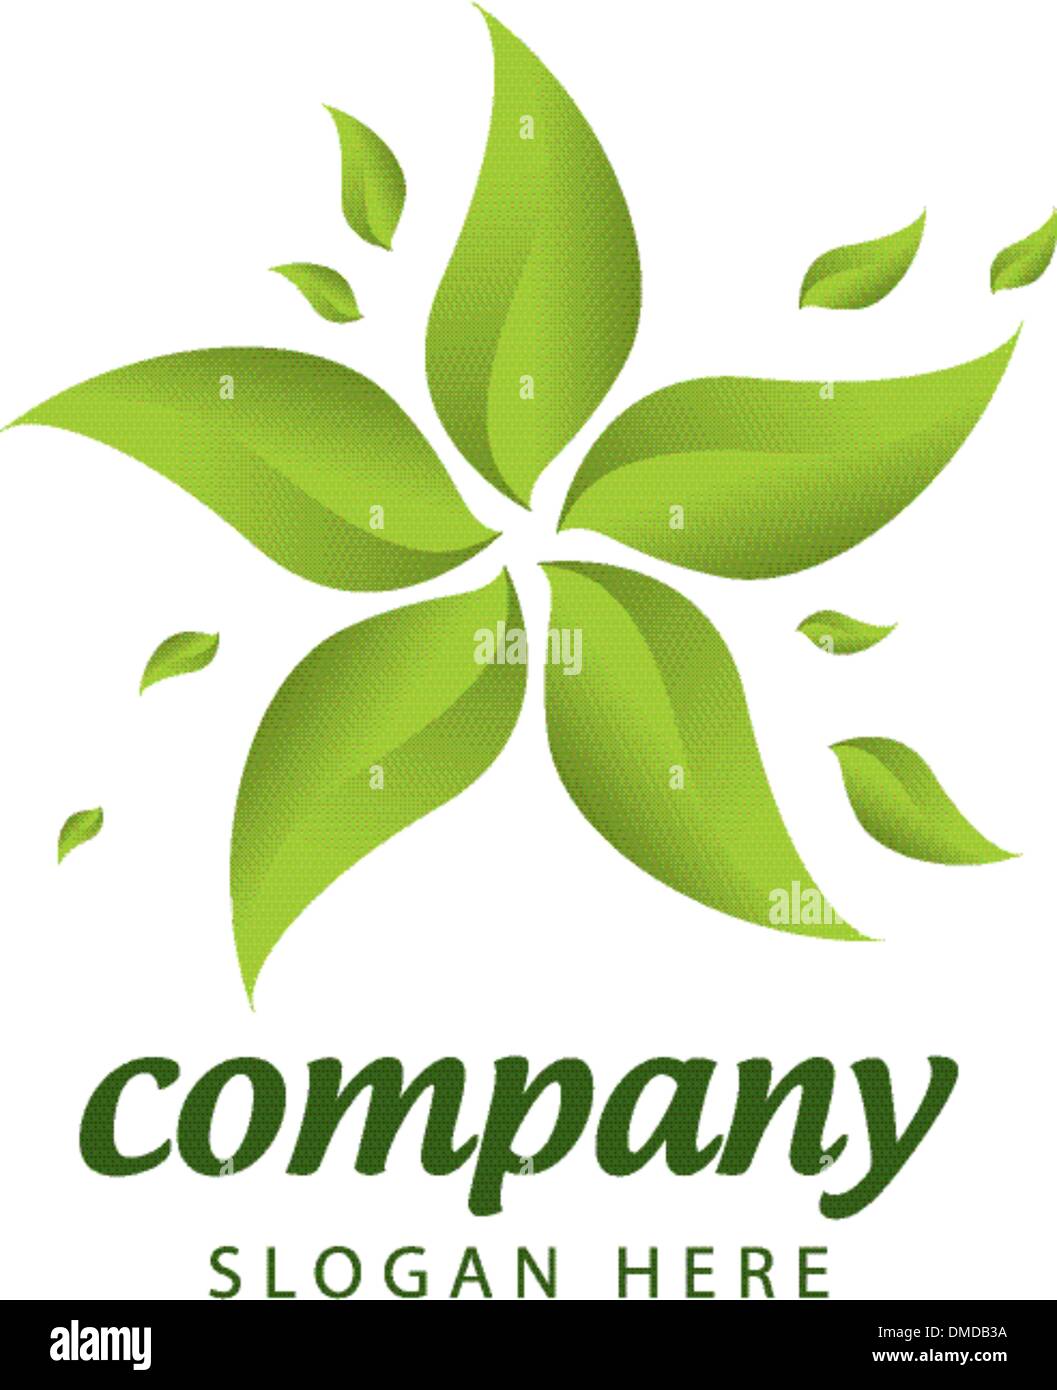 forest management logo Stock Vector